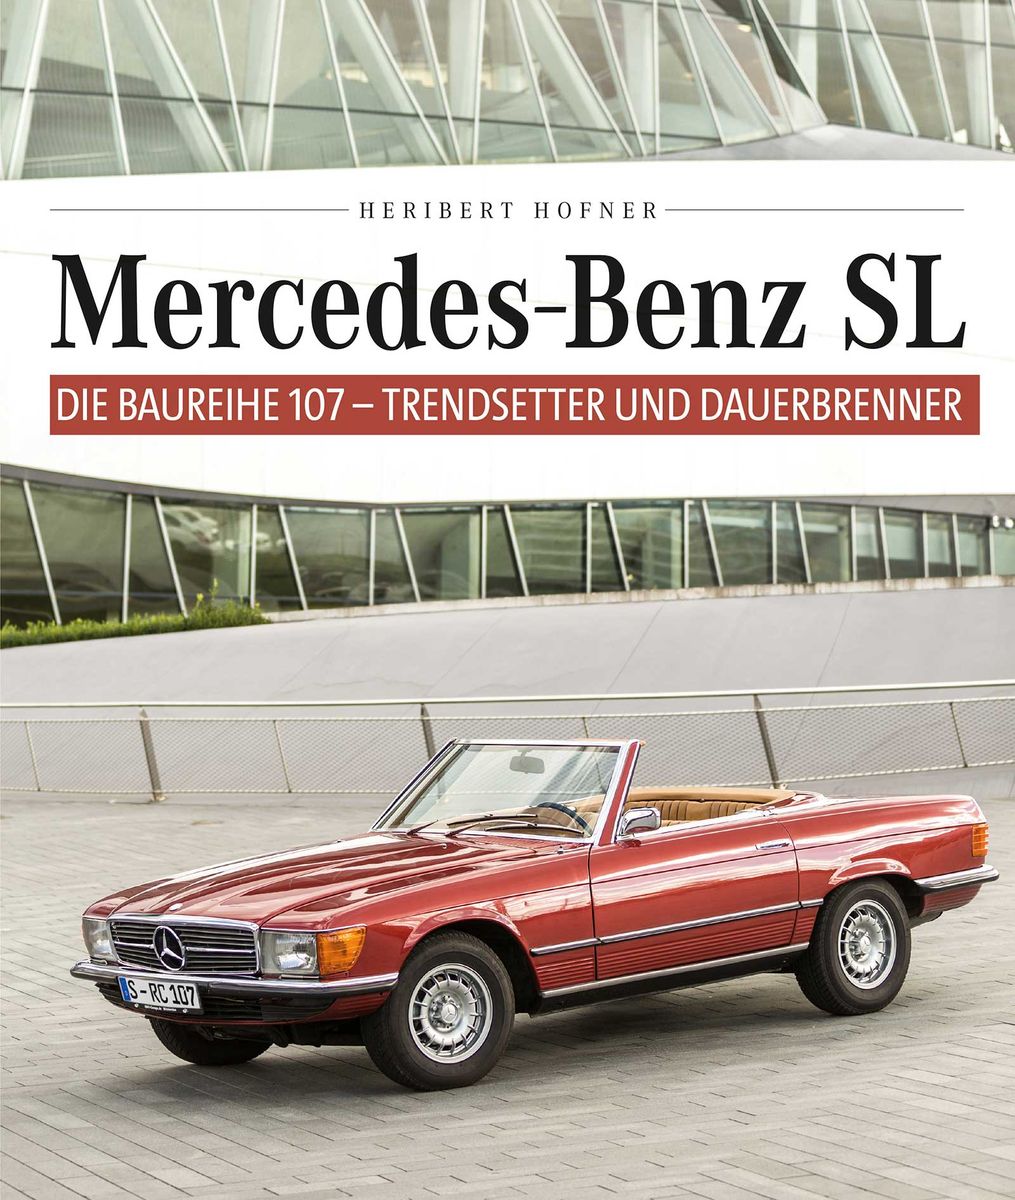 Mercedes-Benz R-Klasse - 978-3-7977-0517-4 - Verlag Stadler Konstanz